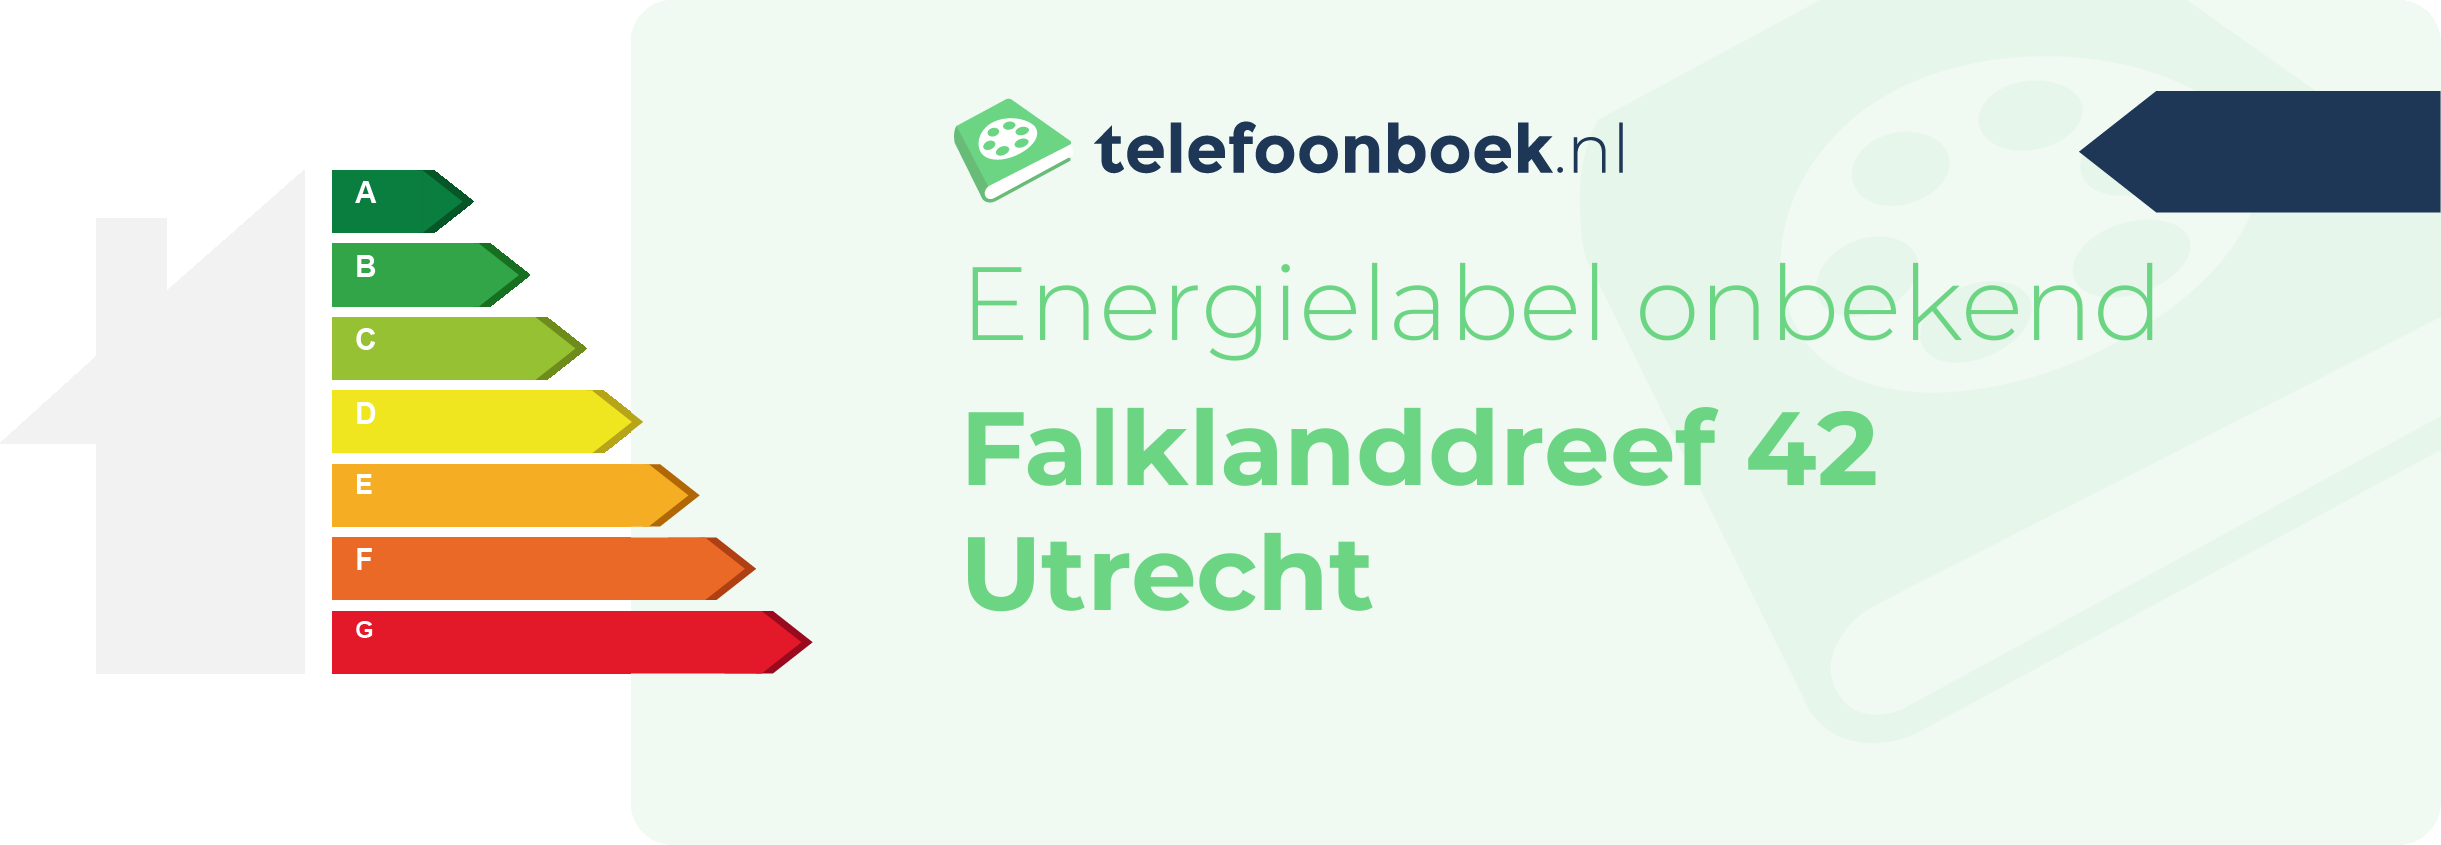 Energielabel Falklanddreef 42 Utrecht